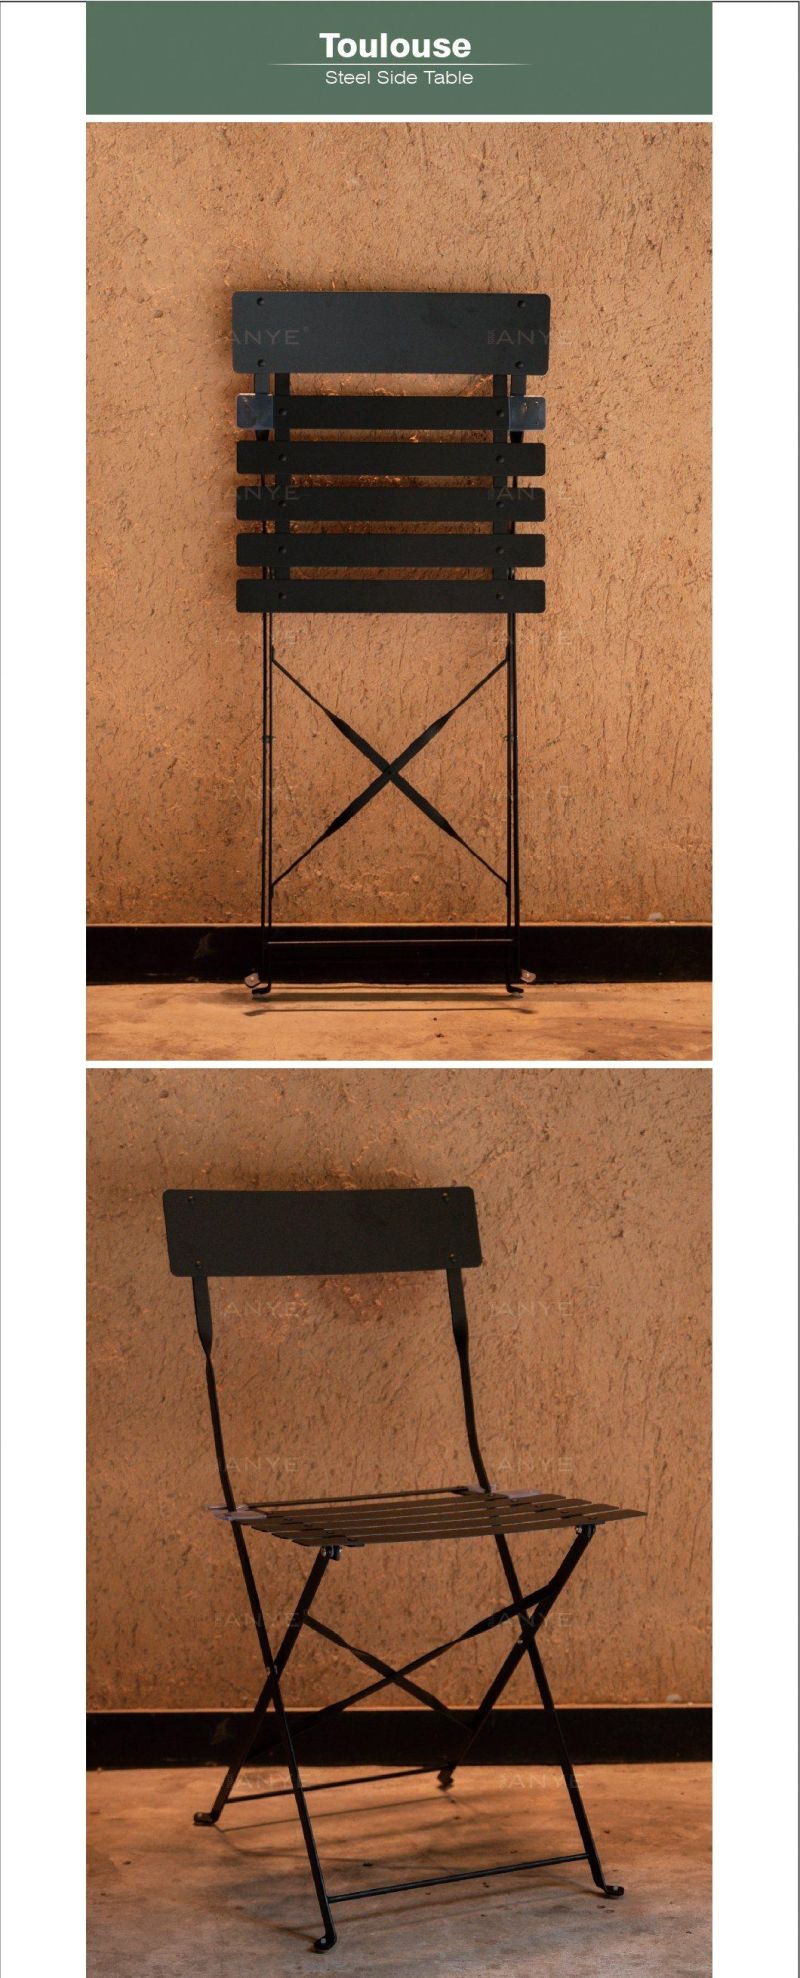 Modern Furniture Portable Outdoor Rust Resistant Folding Garden Seat Side Bistro Chair